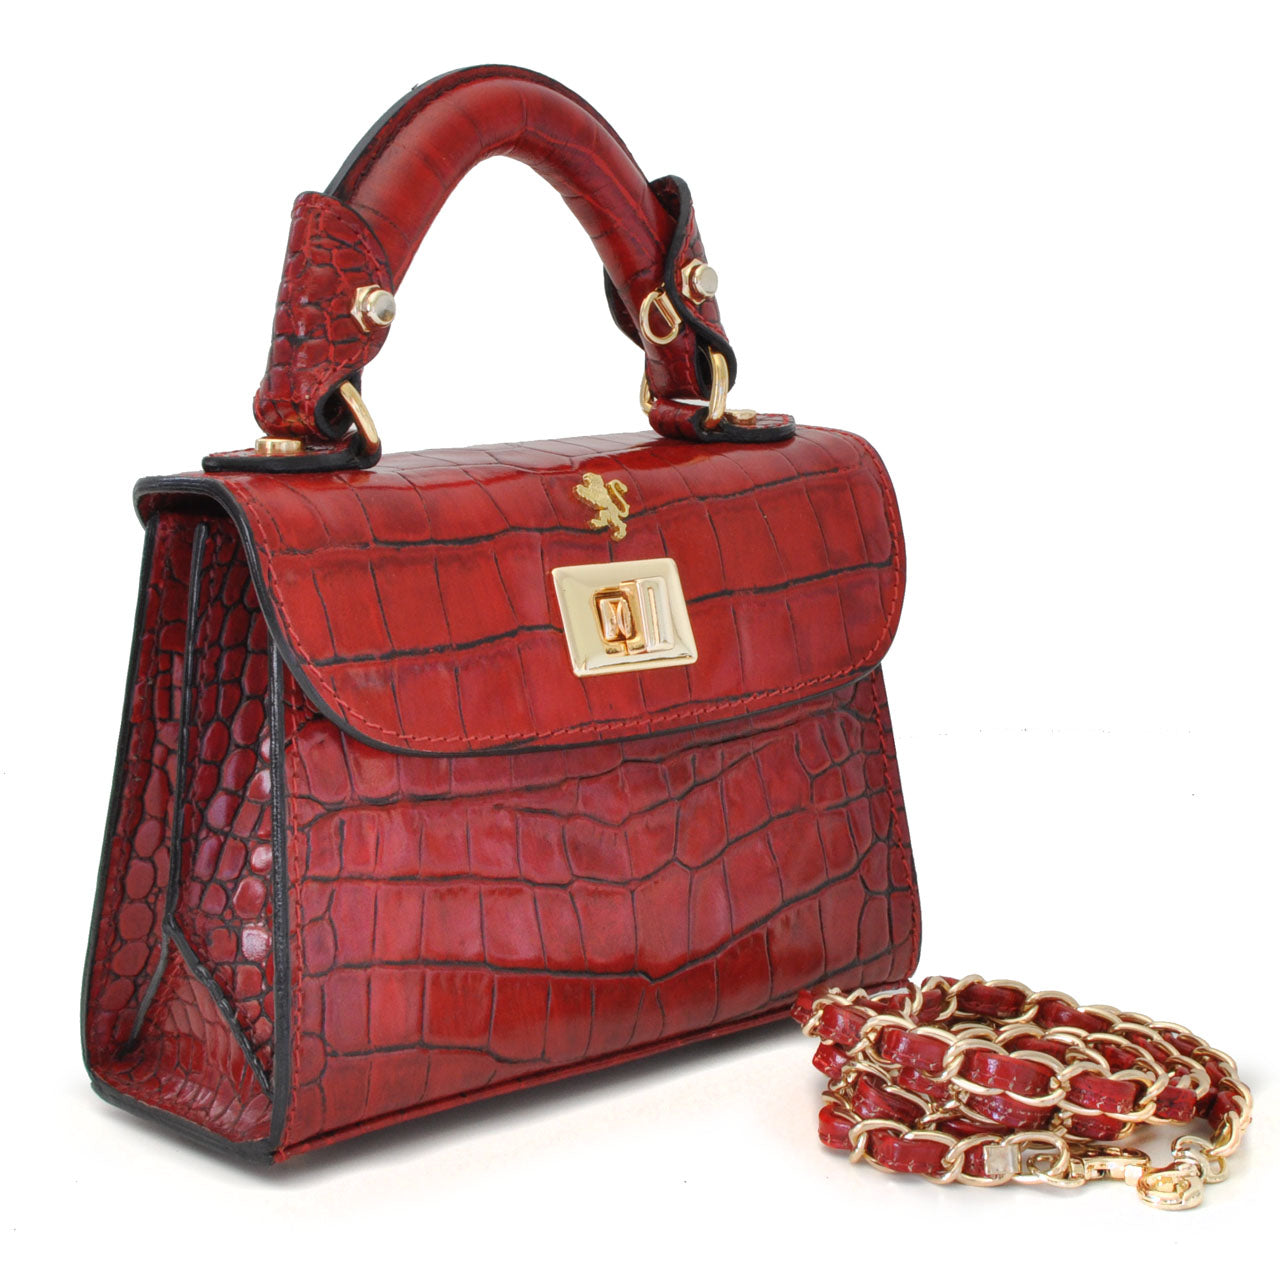 Pratesi Lucignano Small Handbag in genuine Italian leather - Lucignano Small Handbag Emerald